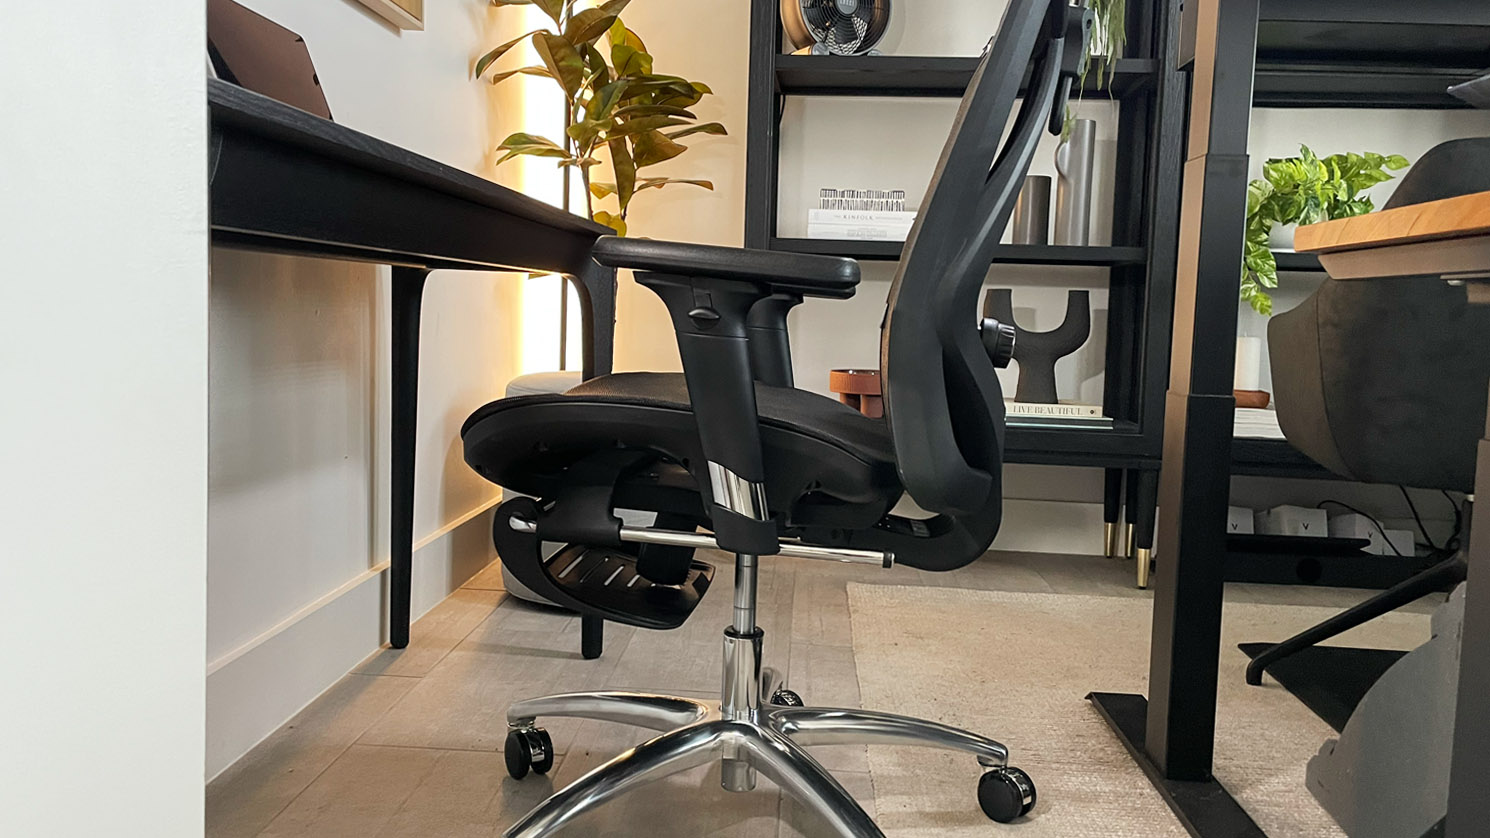 Sihoo M57 Ergonomic Office Chair –